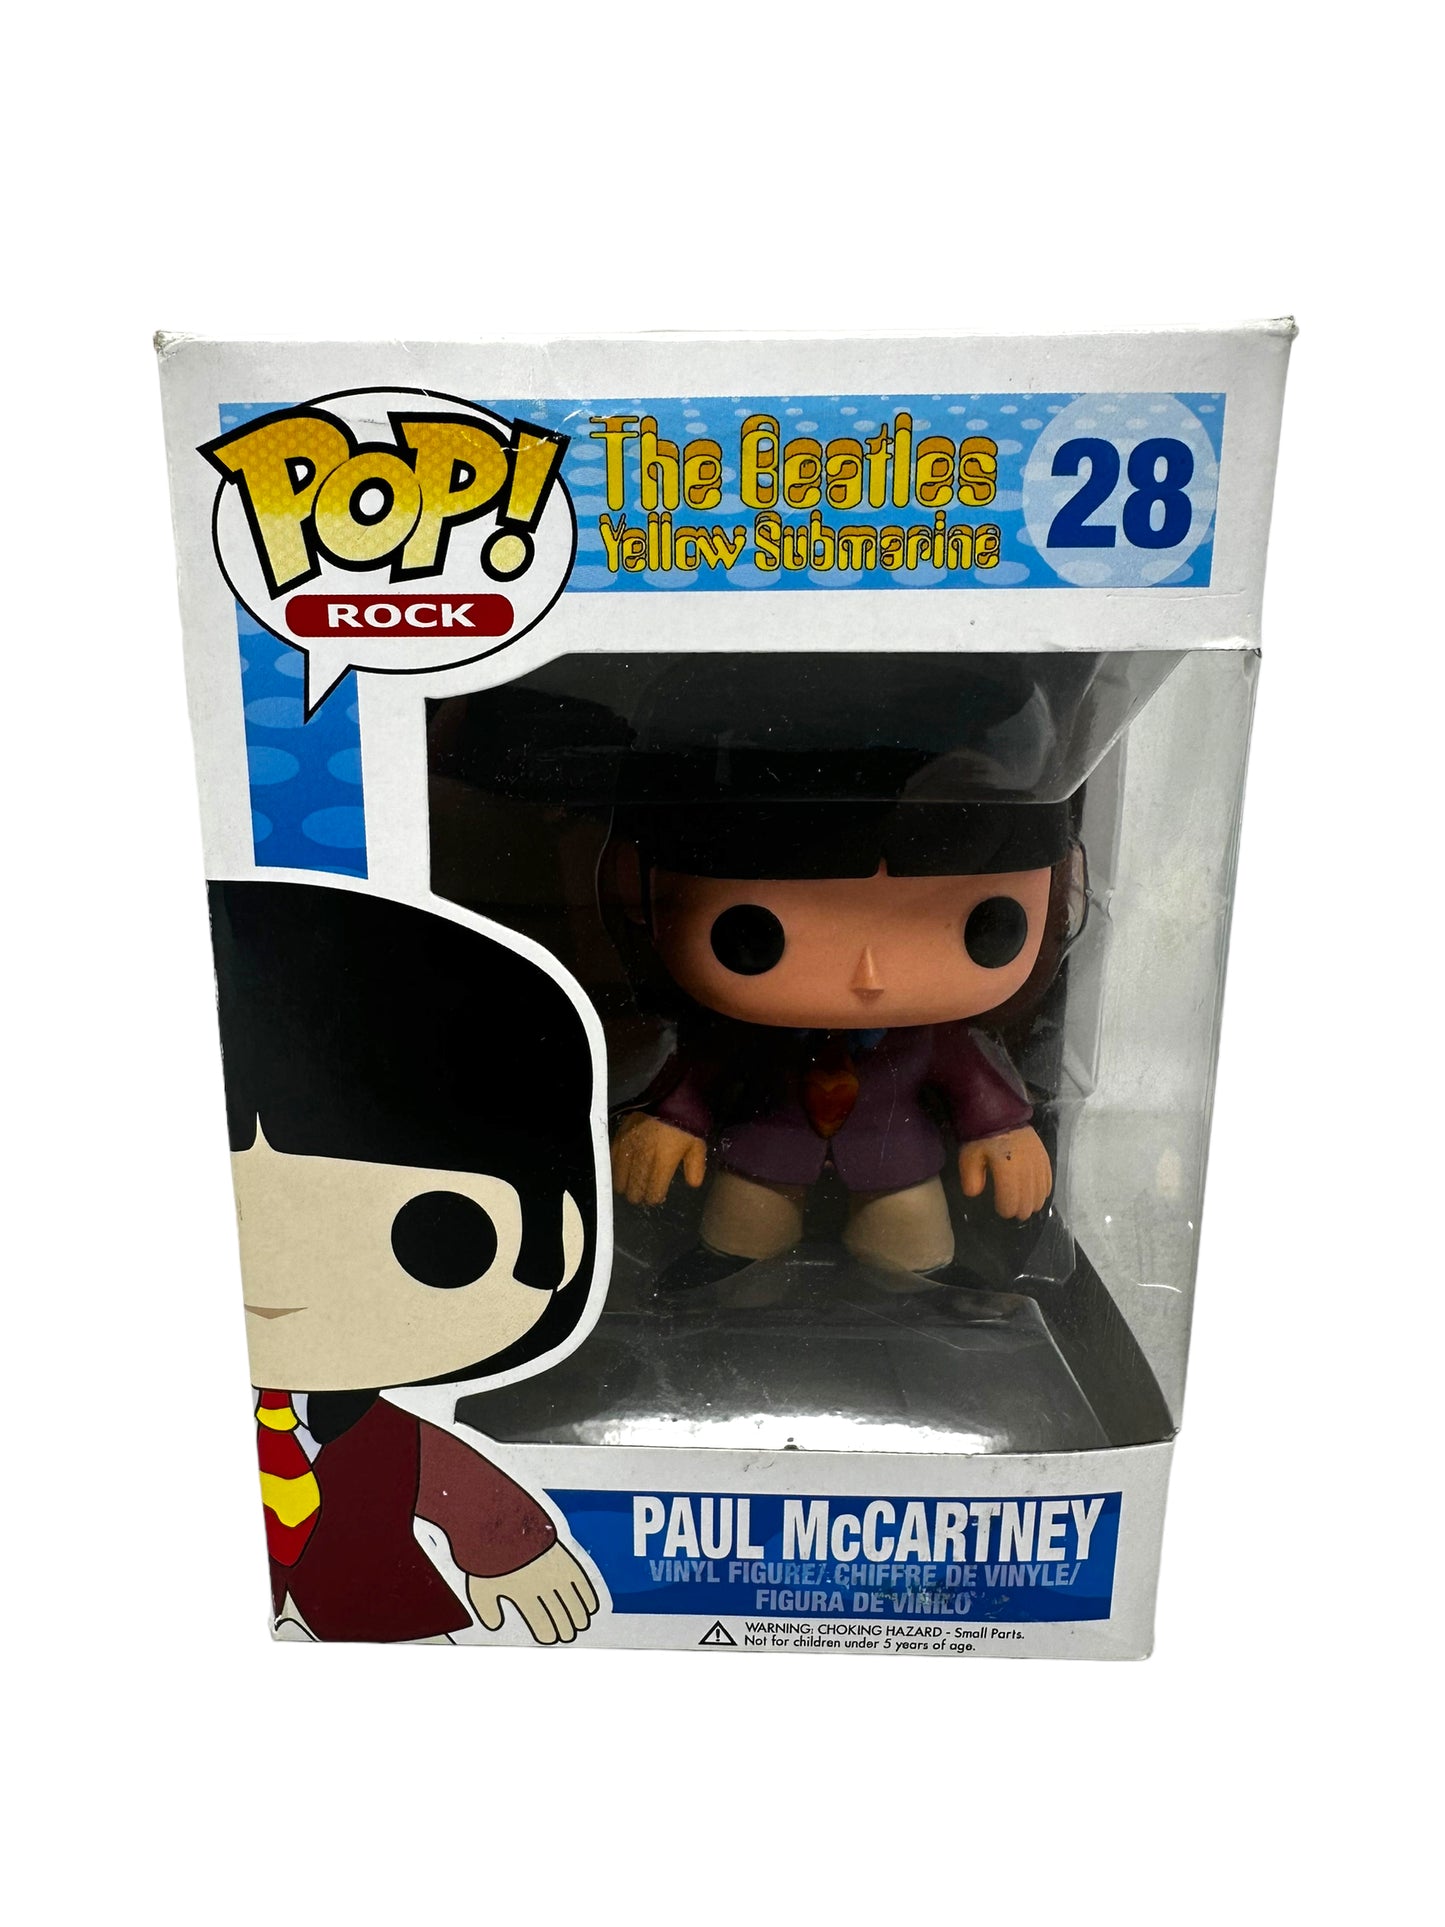 Sold 9/29 2012 Paul McCartney 28 (The Beetles)